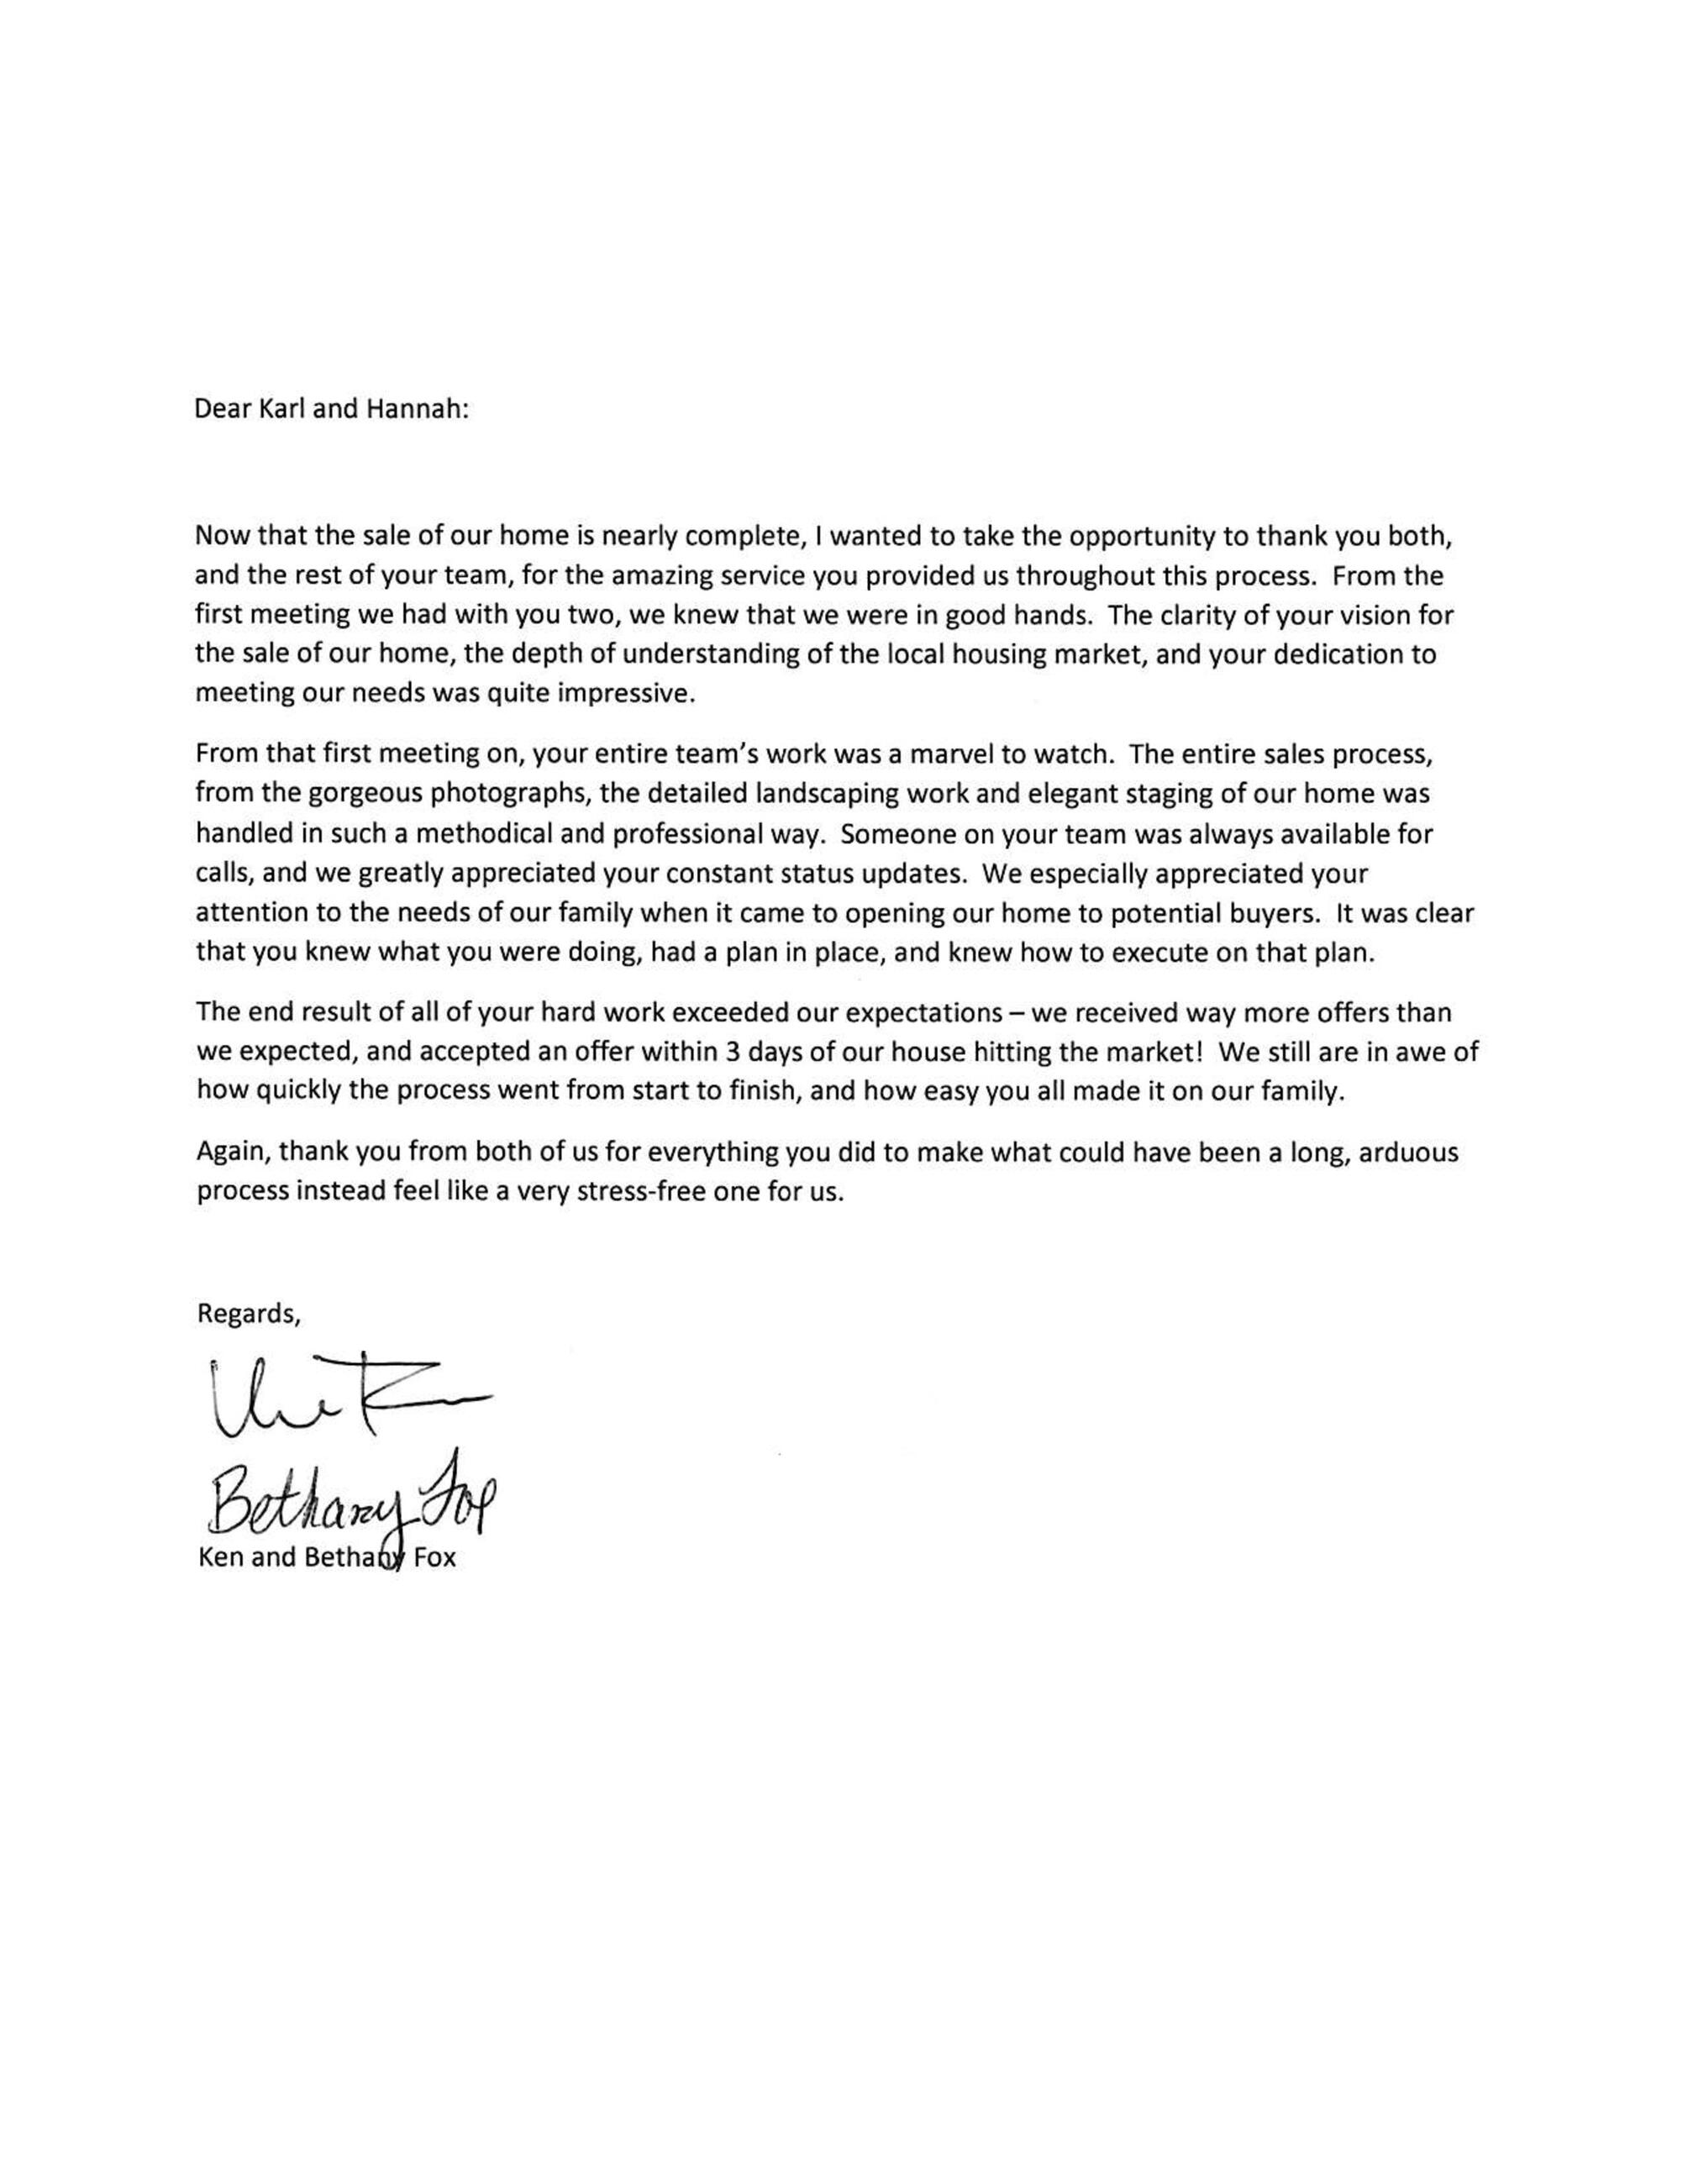 Ken & Bethany Fox Letter